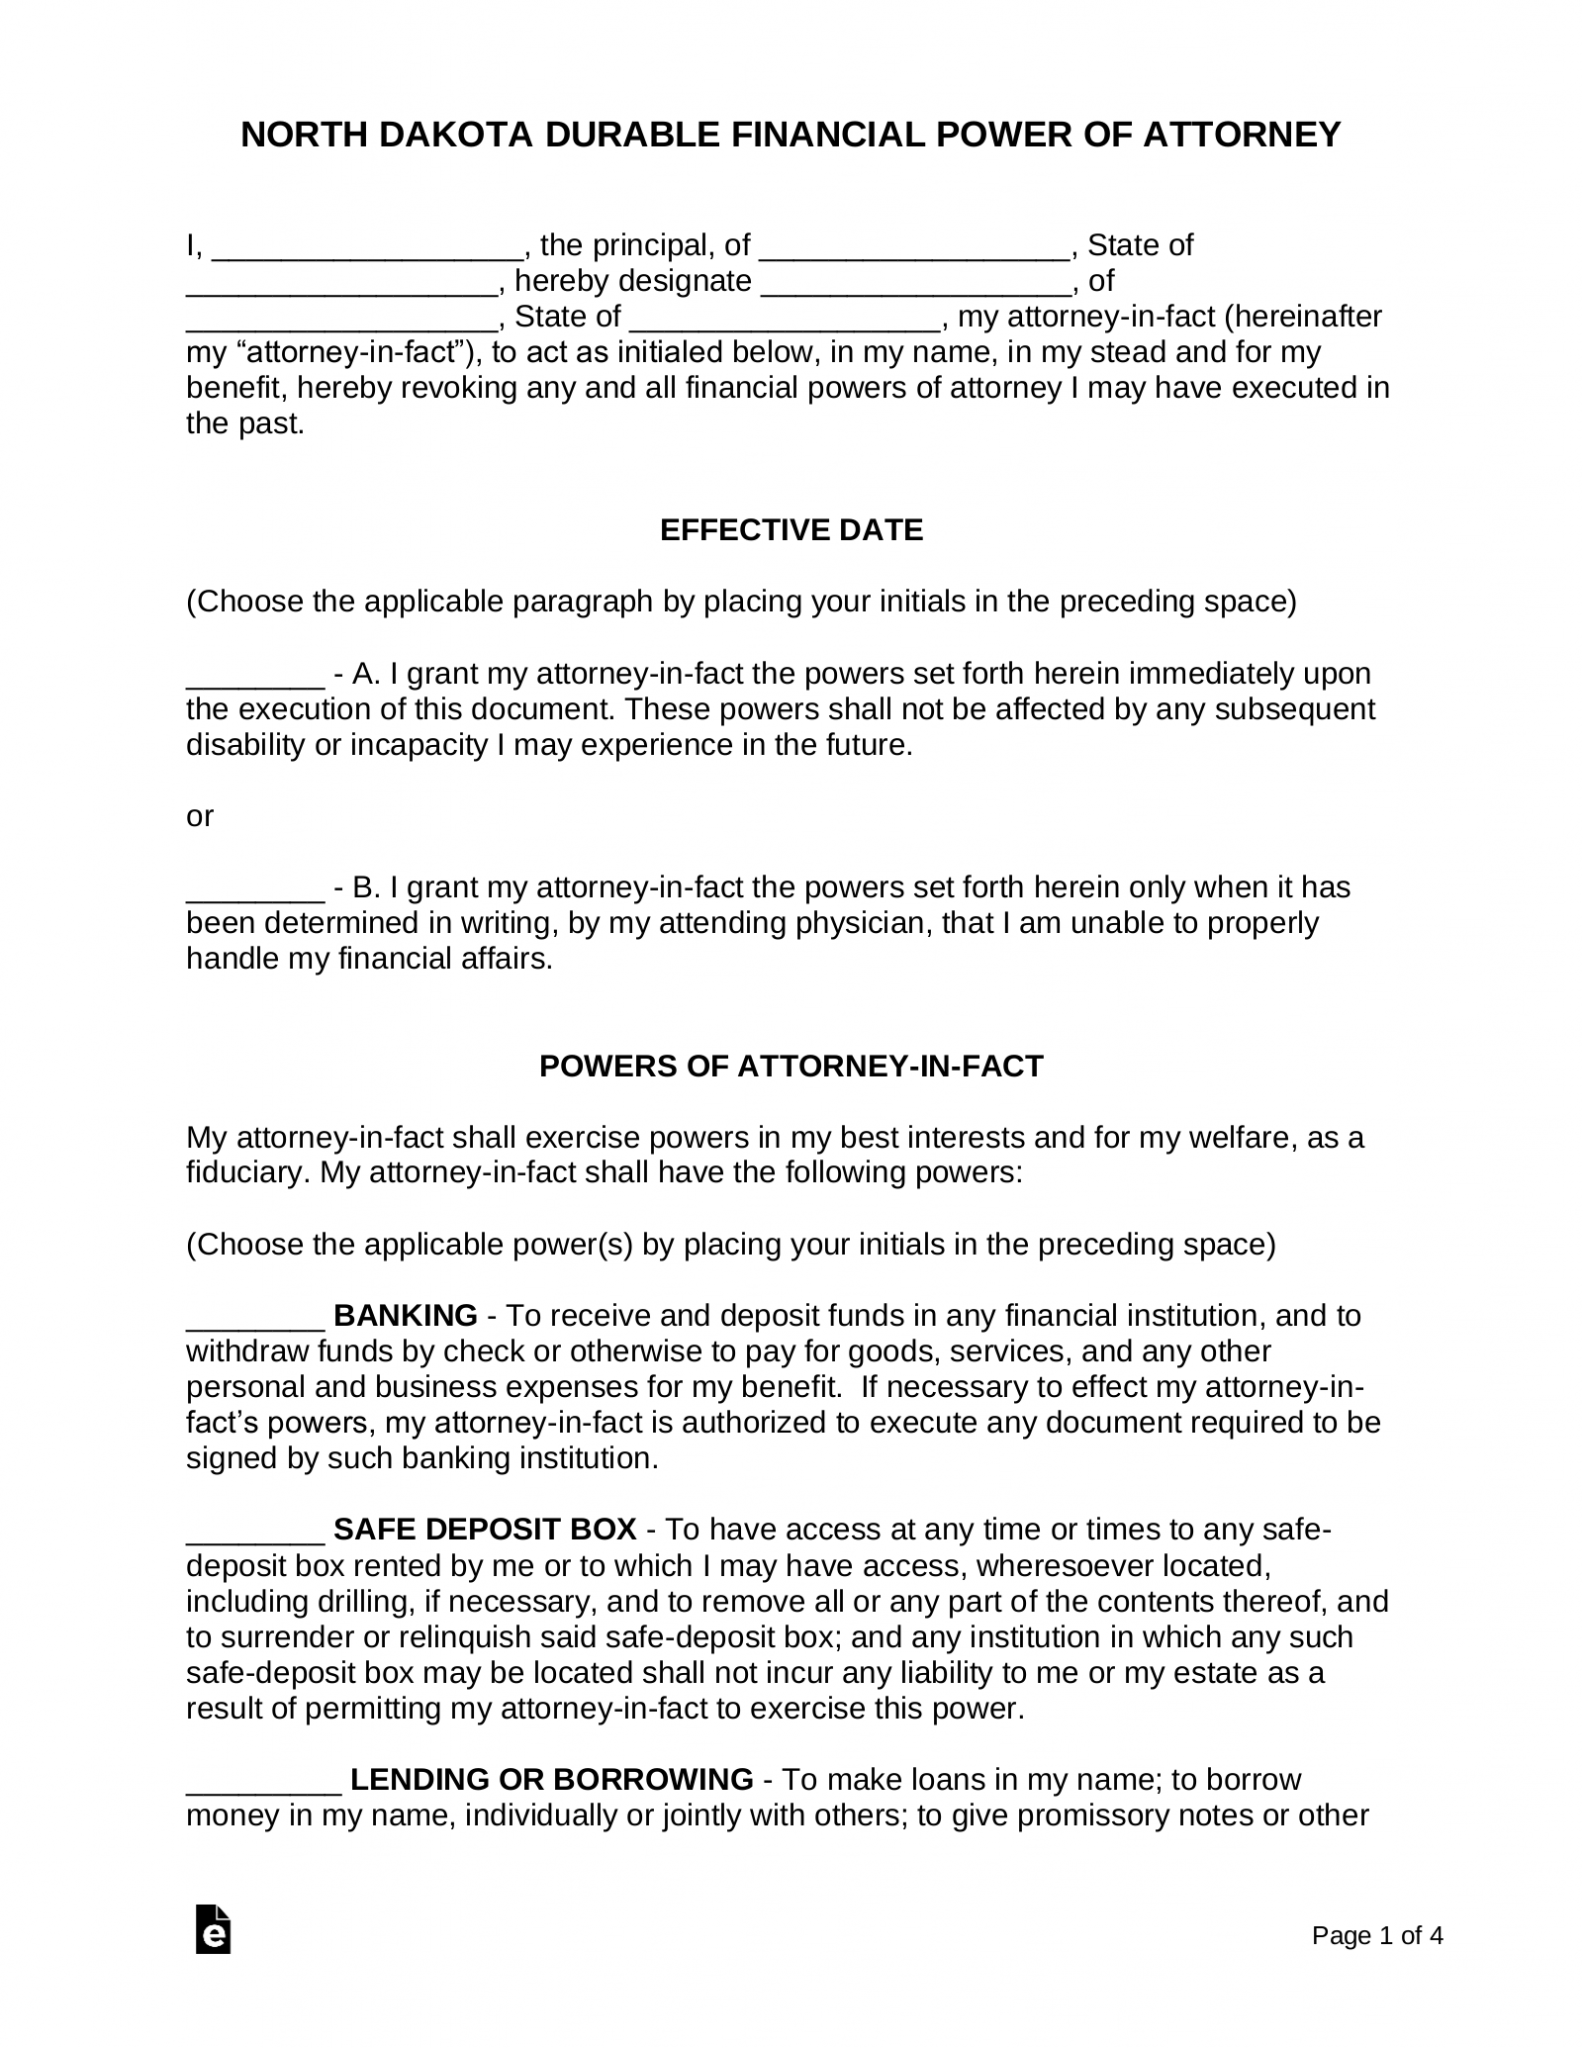 free-north-dakota-power-of-attorney-forms-9-types-pdf-word-eforms